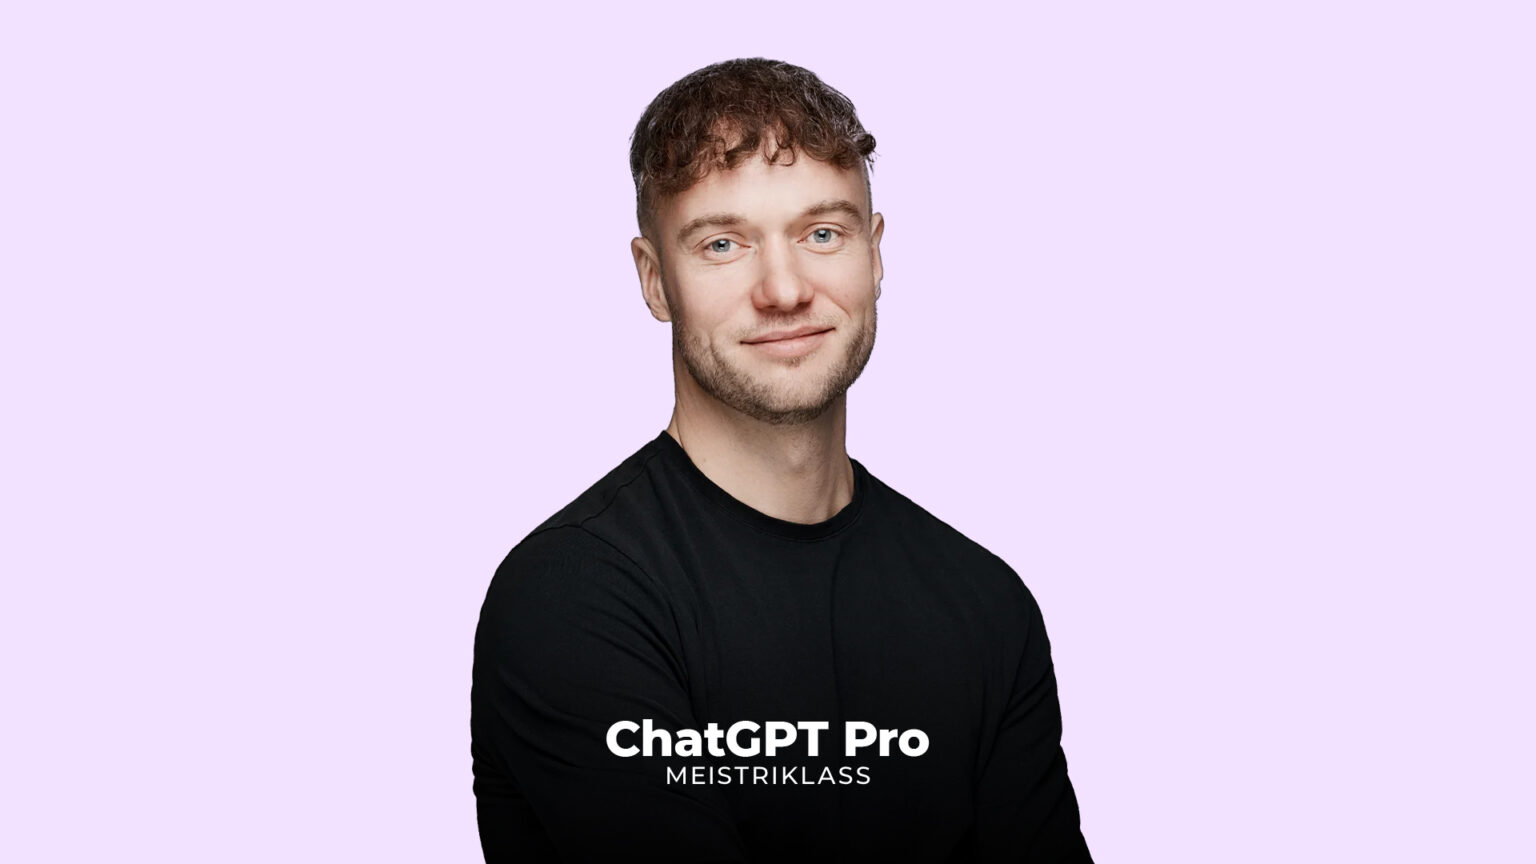 ChatGPT Pro meistriklass